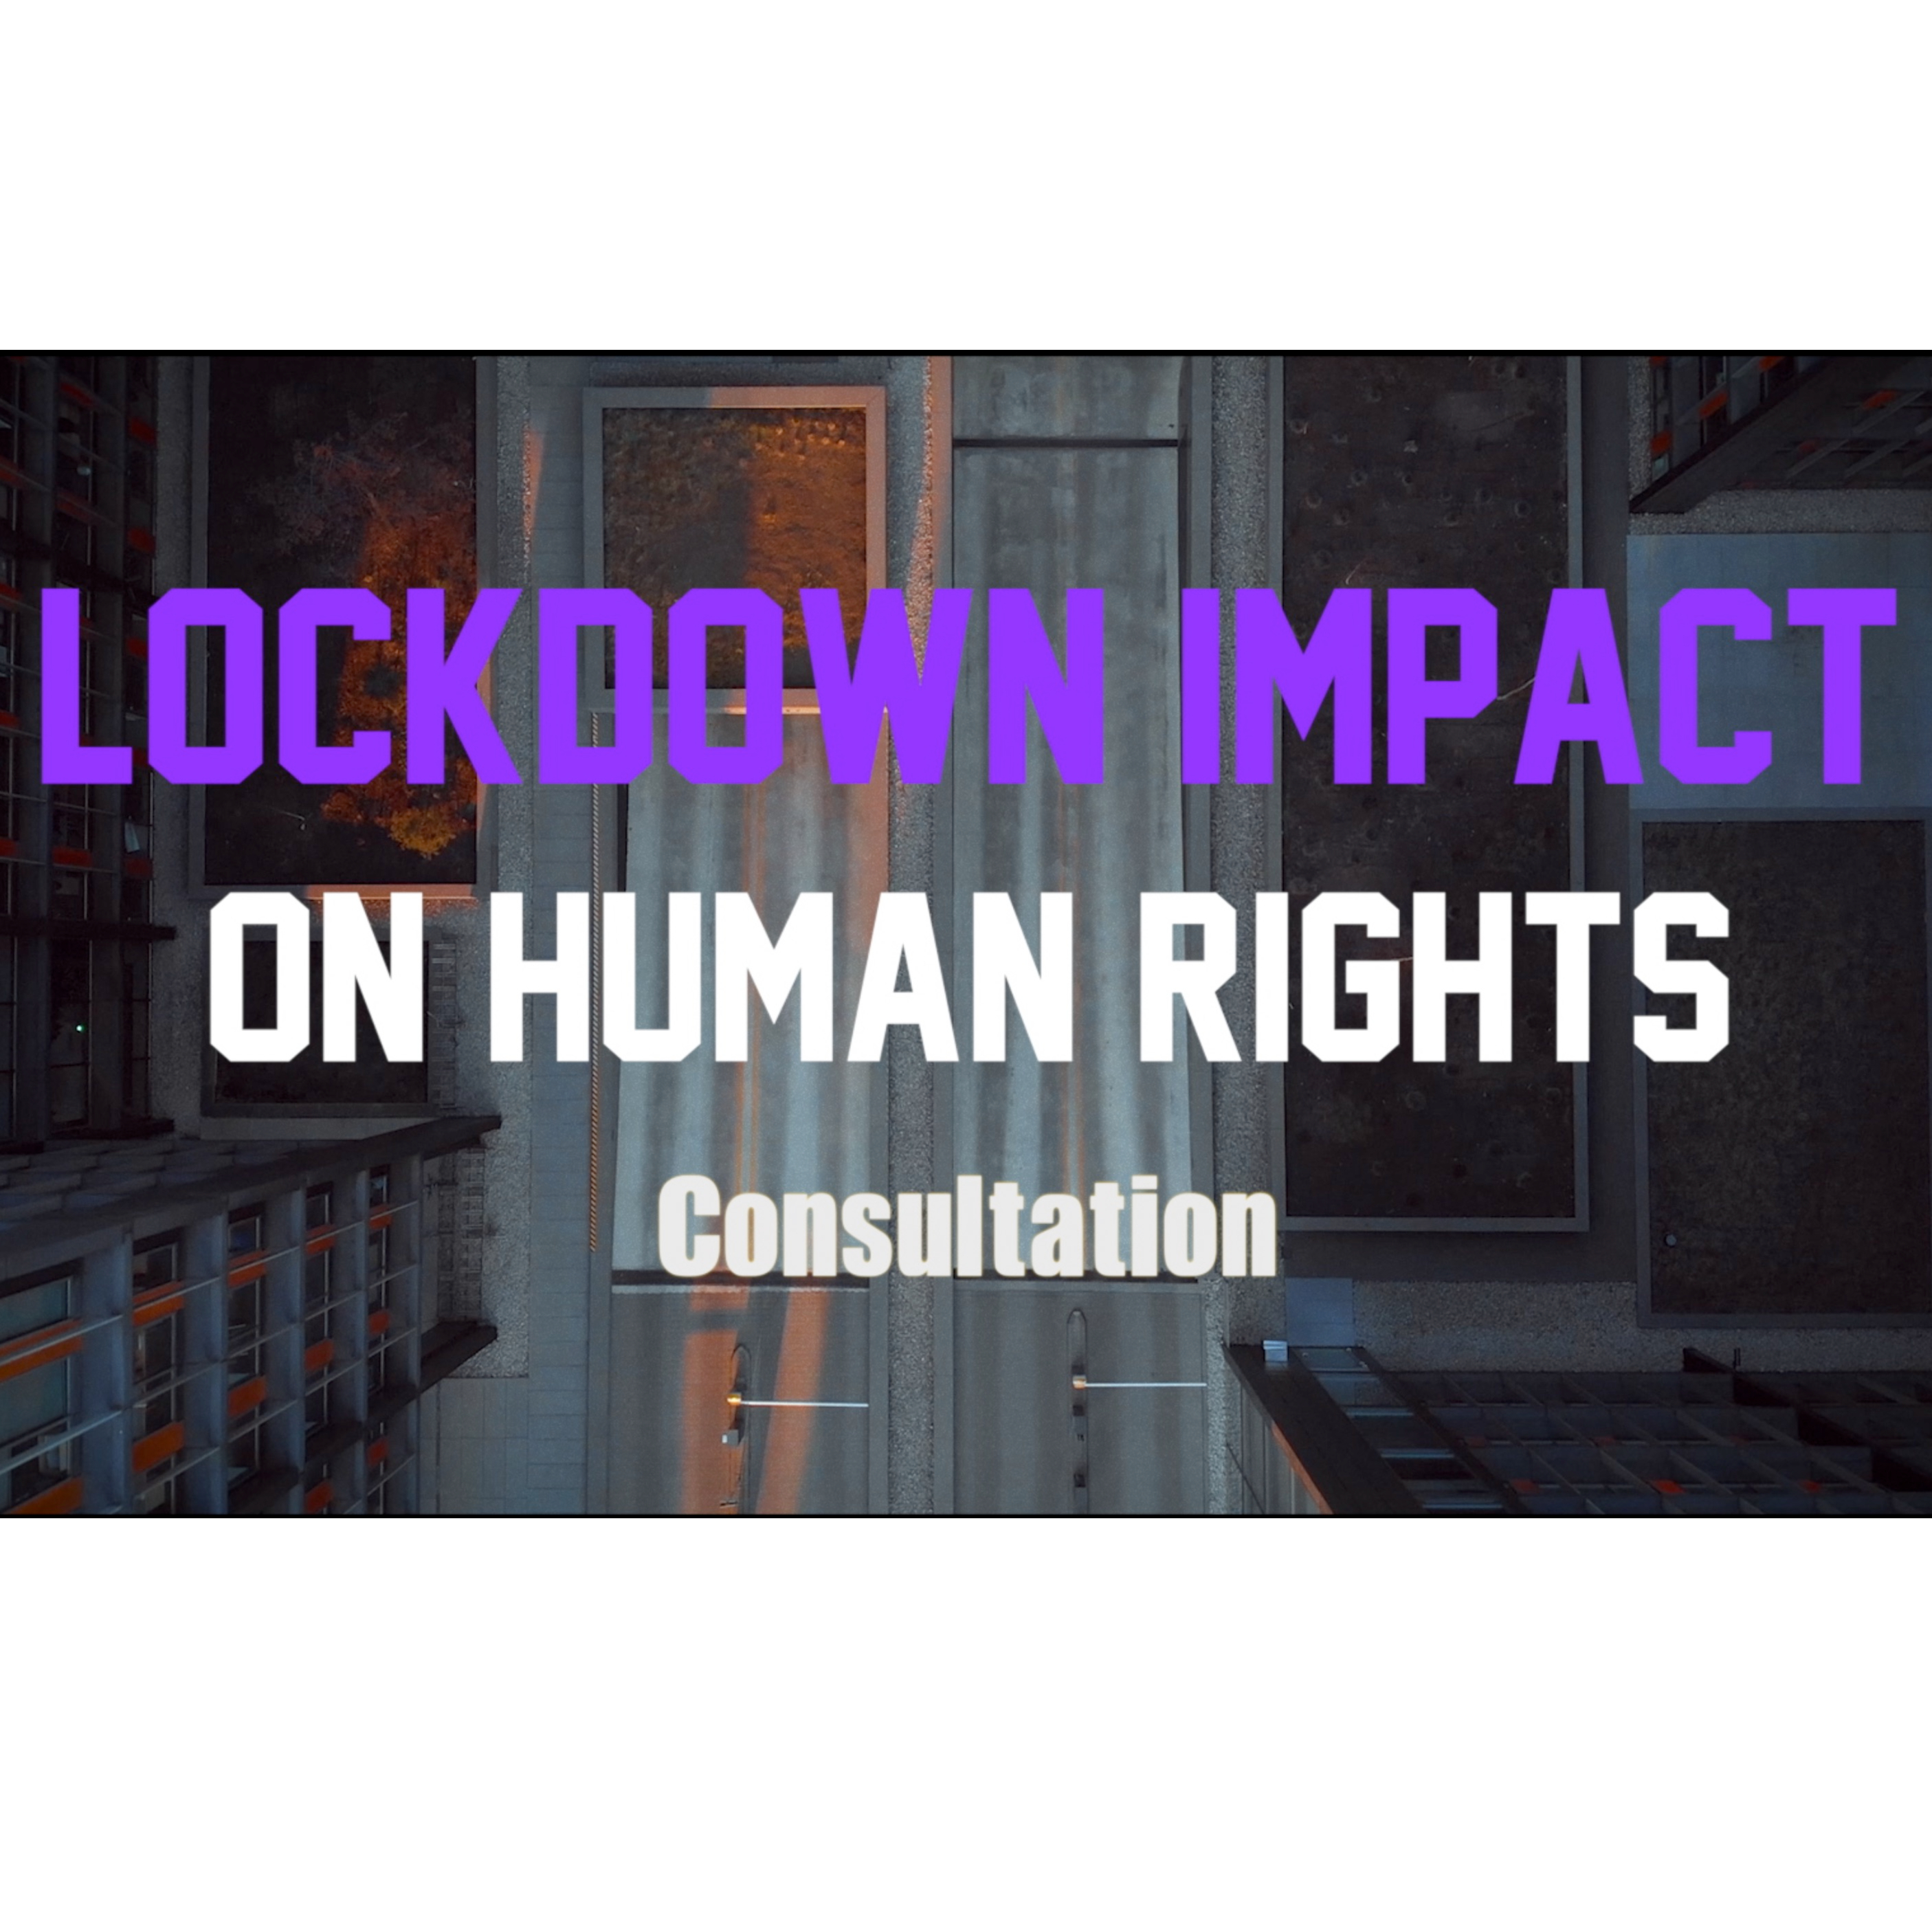 Lockdown Impact on Human Rights - Consultation